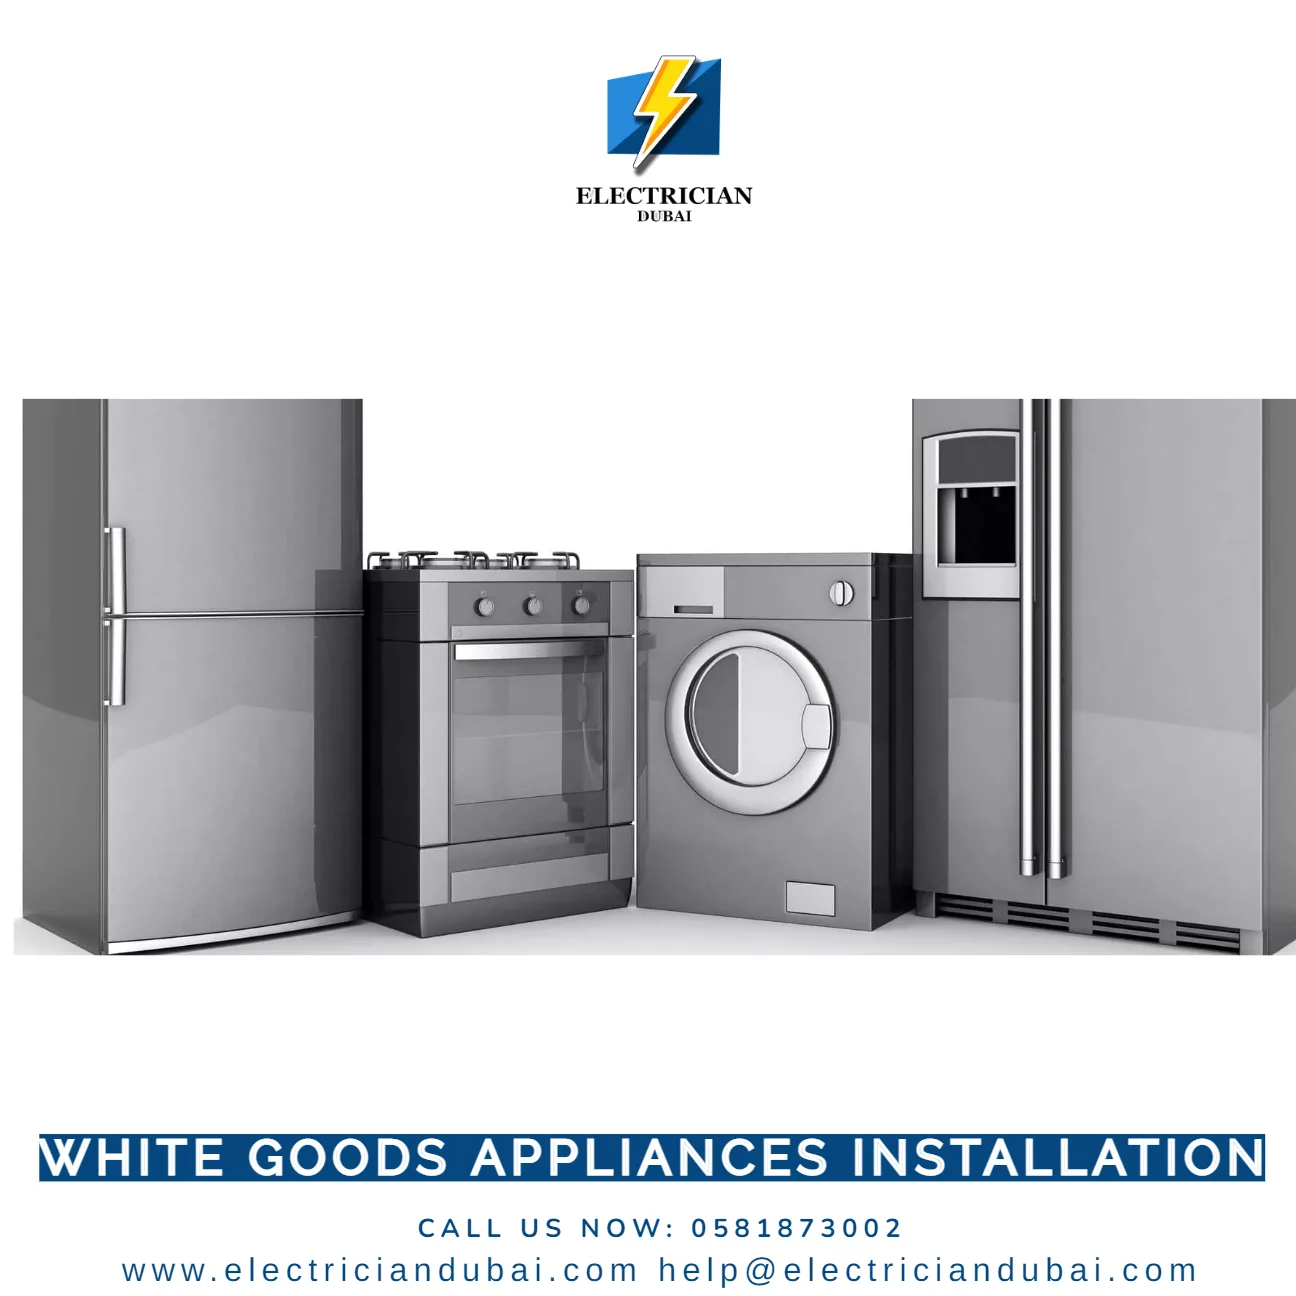 White Goods Appliances Installation